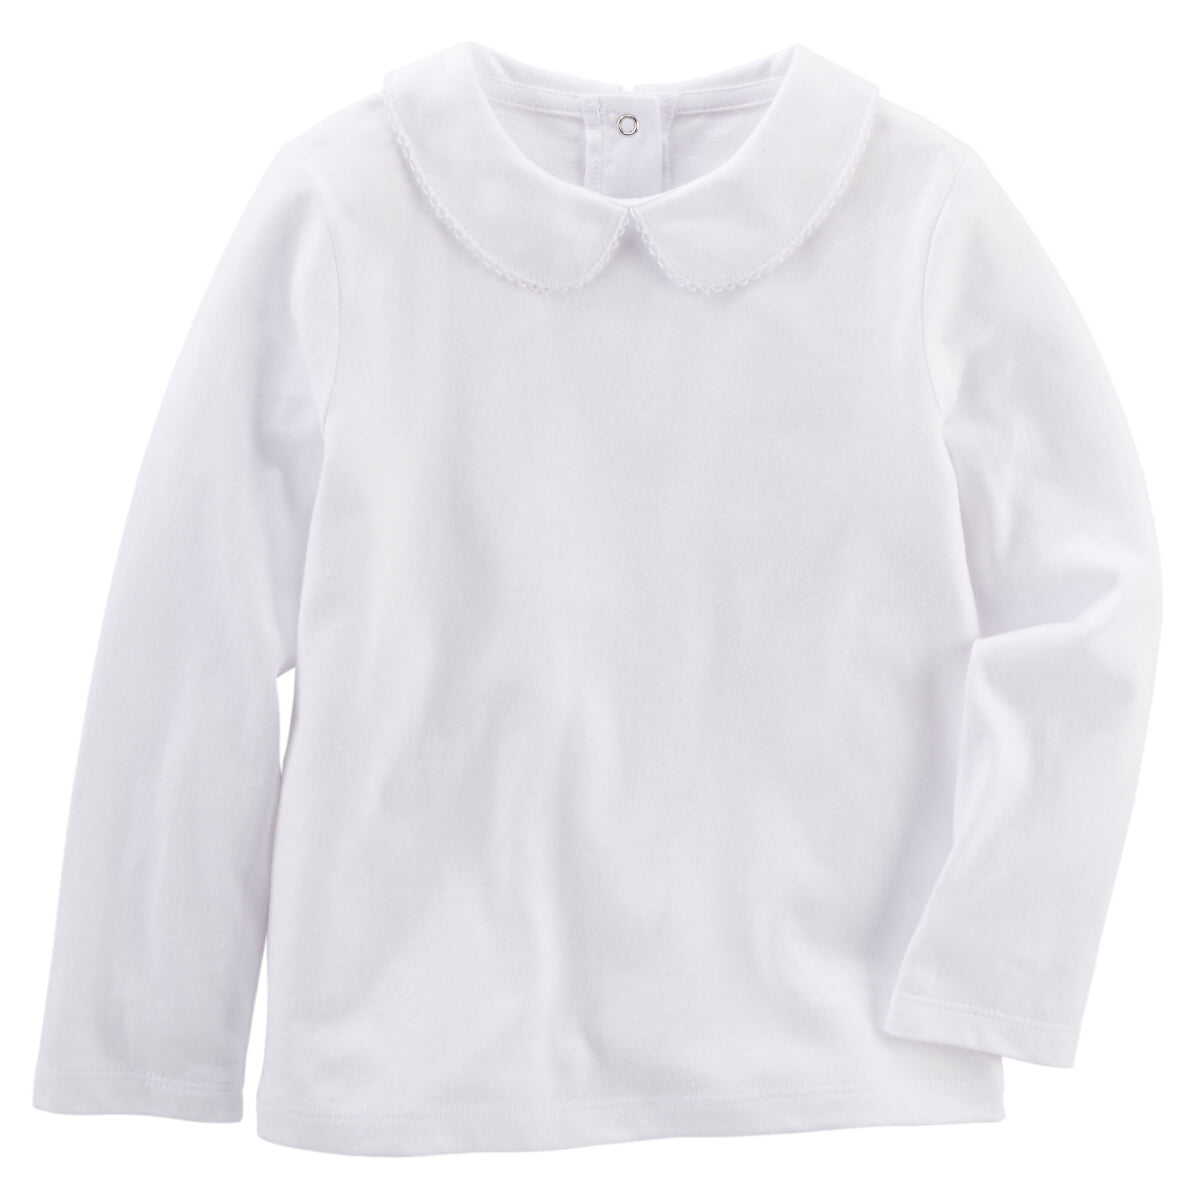 New OshKosh Girls Solid White Peter Pan Collar Shirt Top SS 9 12 18 24 2T 3 4 5T 